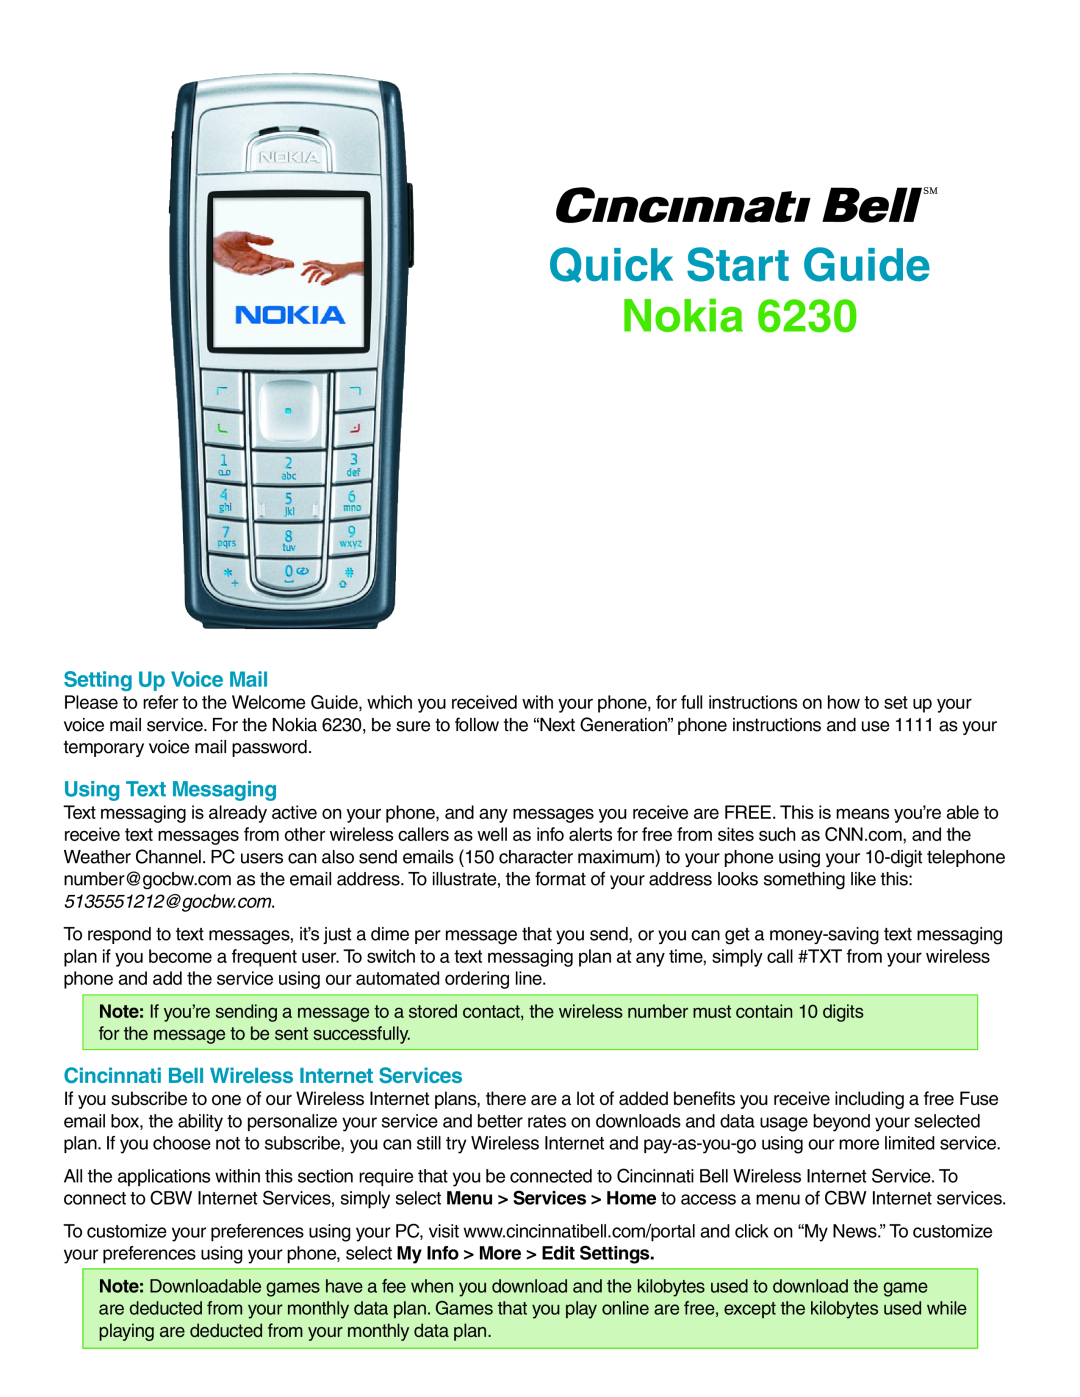 Nokia 6230 quick start Setting Up Voice Mail, Using Text Messaging, Cincinnati Bell Wireless Internet Services, Nokia 